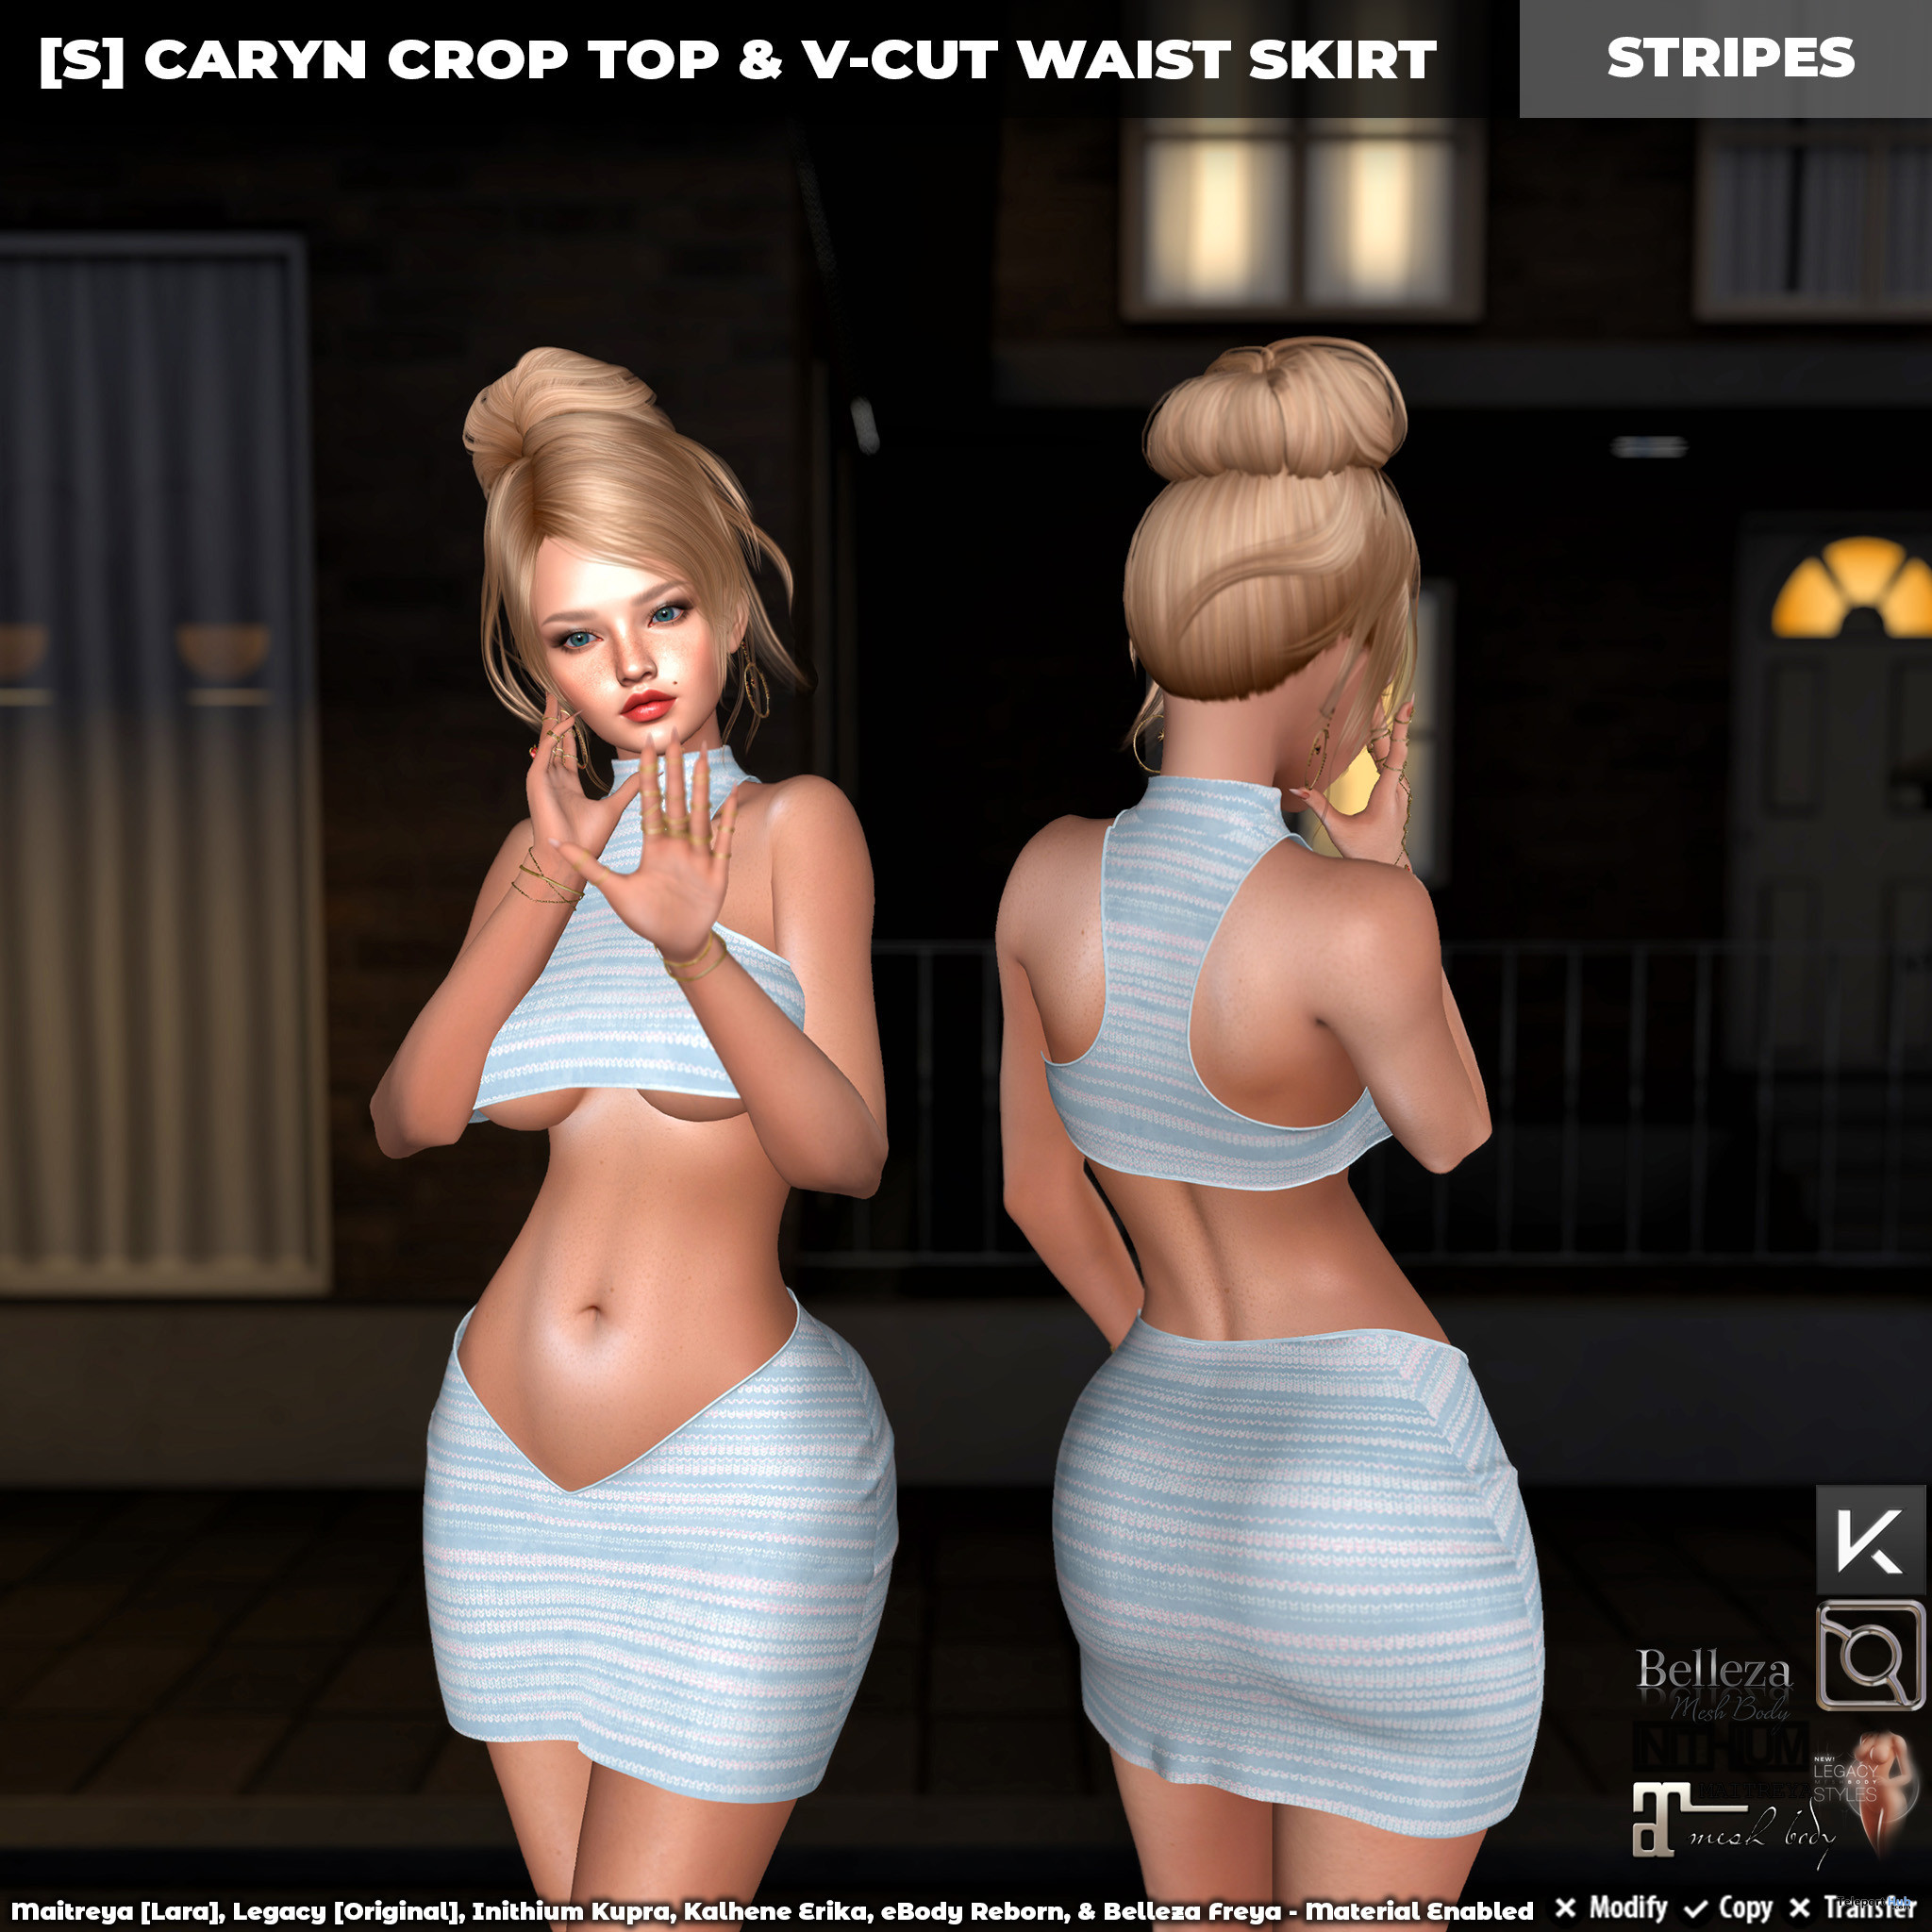 New Release: [S] Caryn Crop Top & V-Cut Waist Skirt by [satus Inc] - Teleport Hub - teleporthub.com